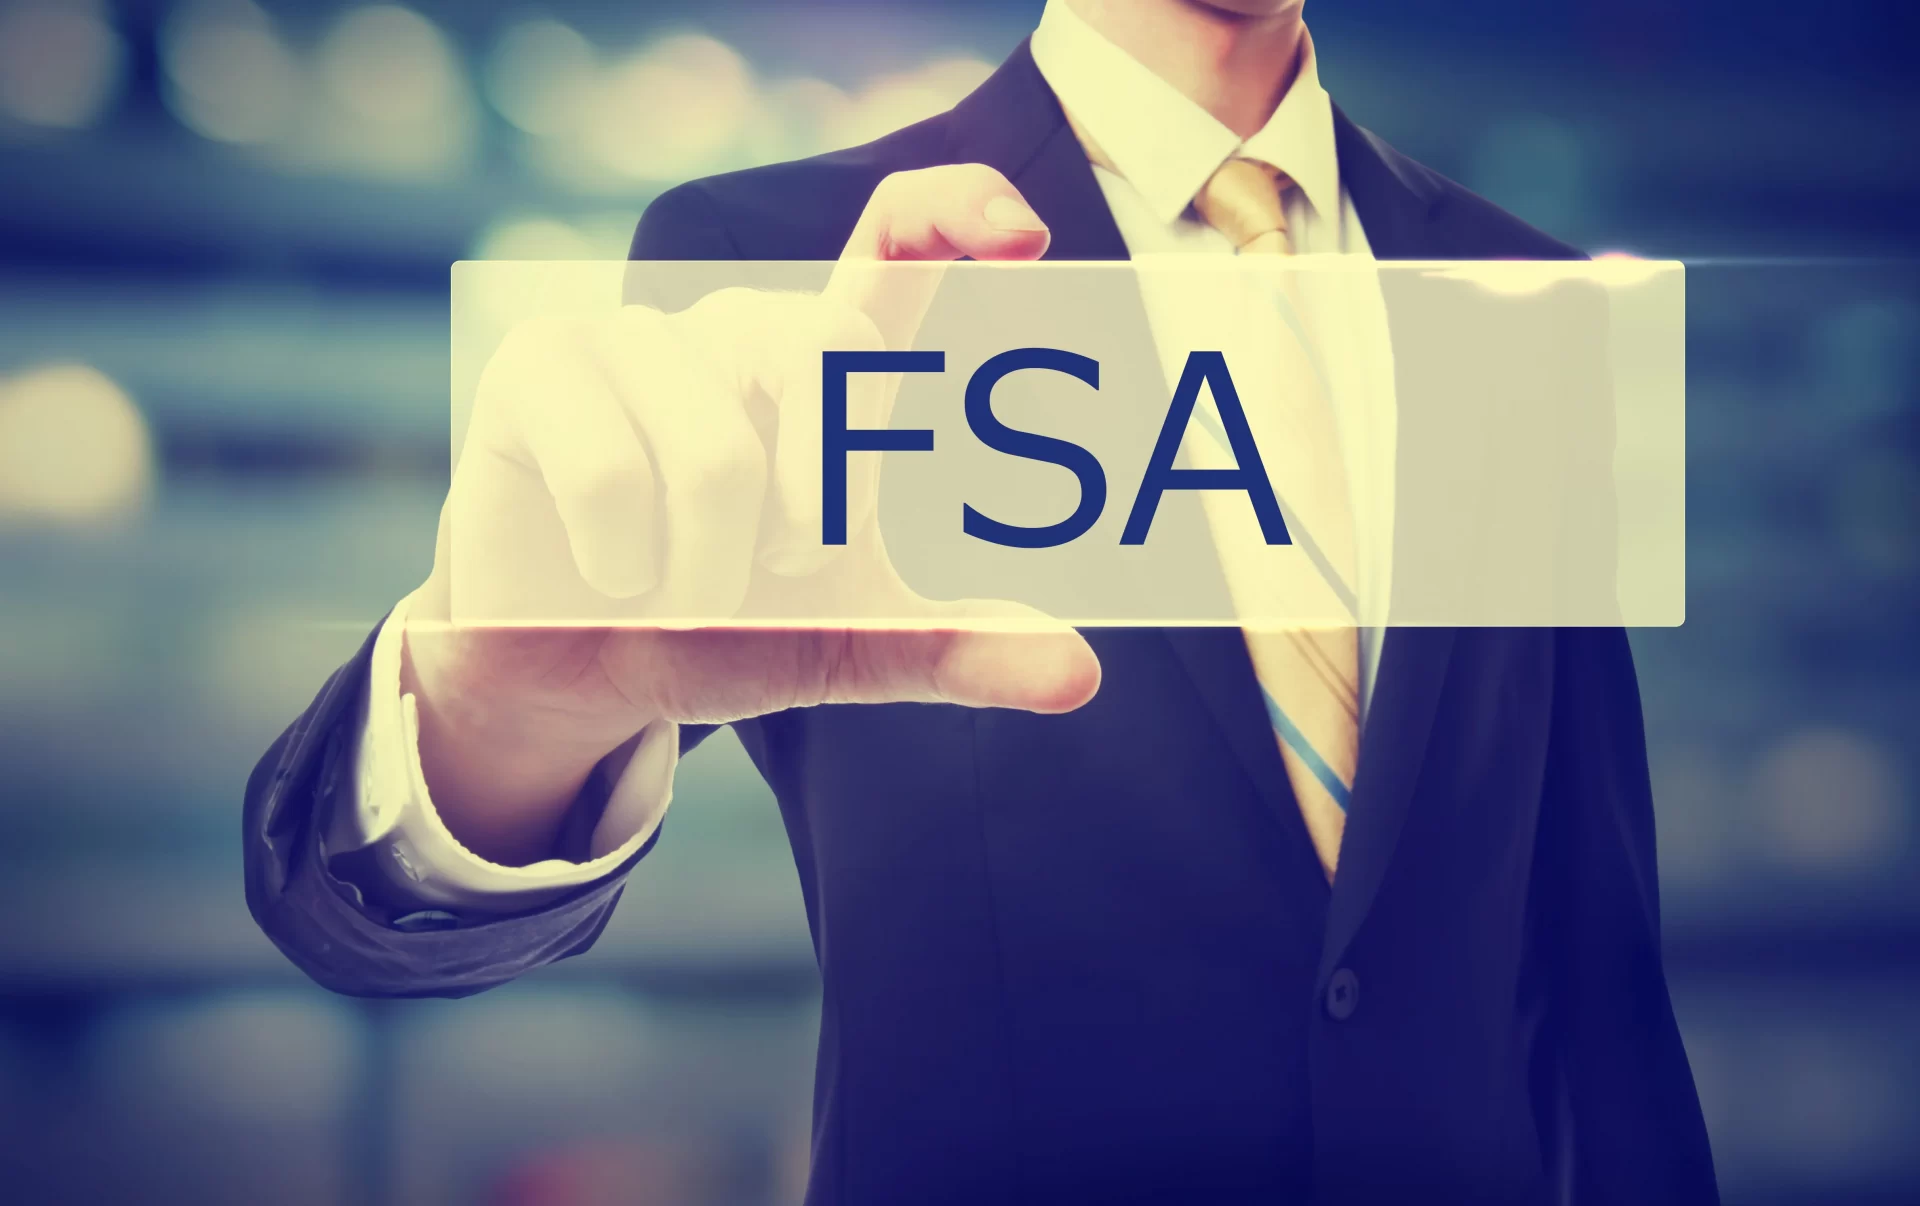 HSA vs. FSA - Next Step Financial Transitions